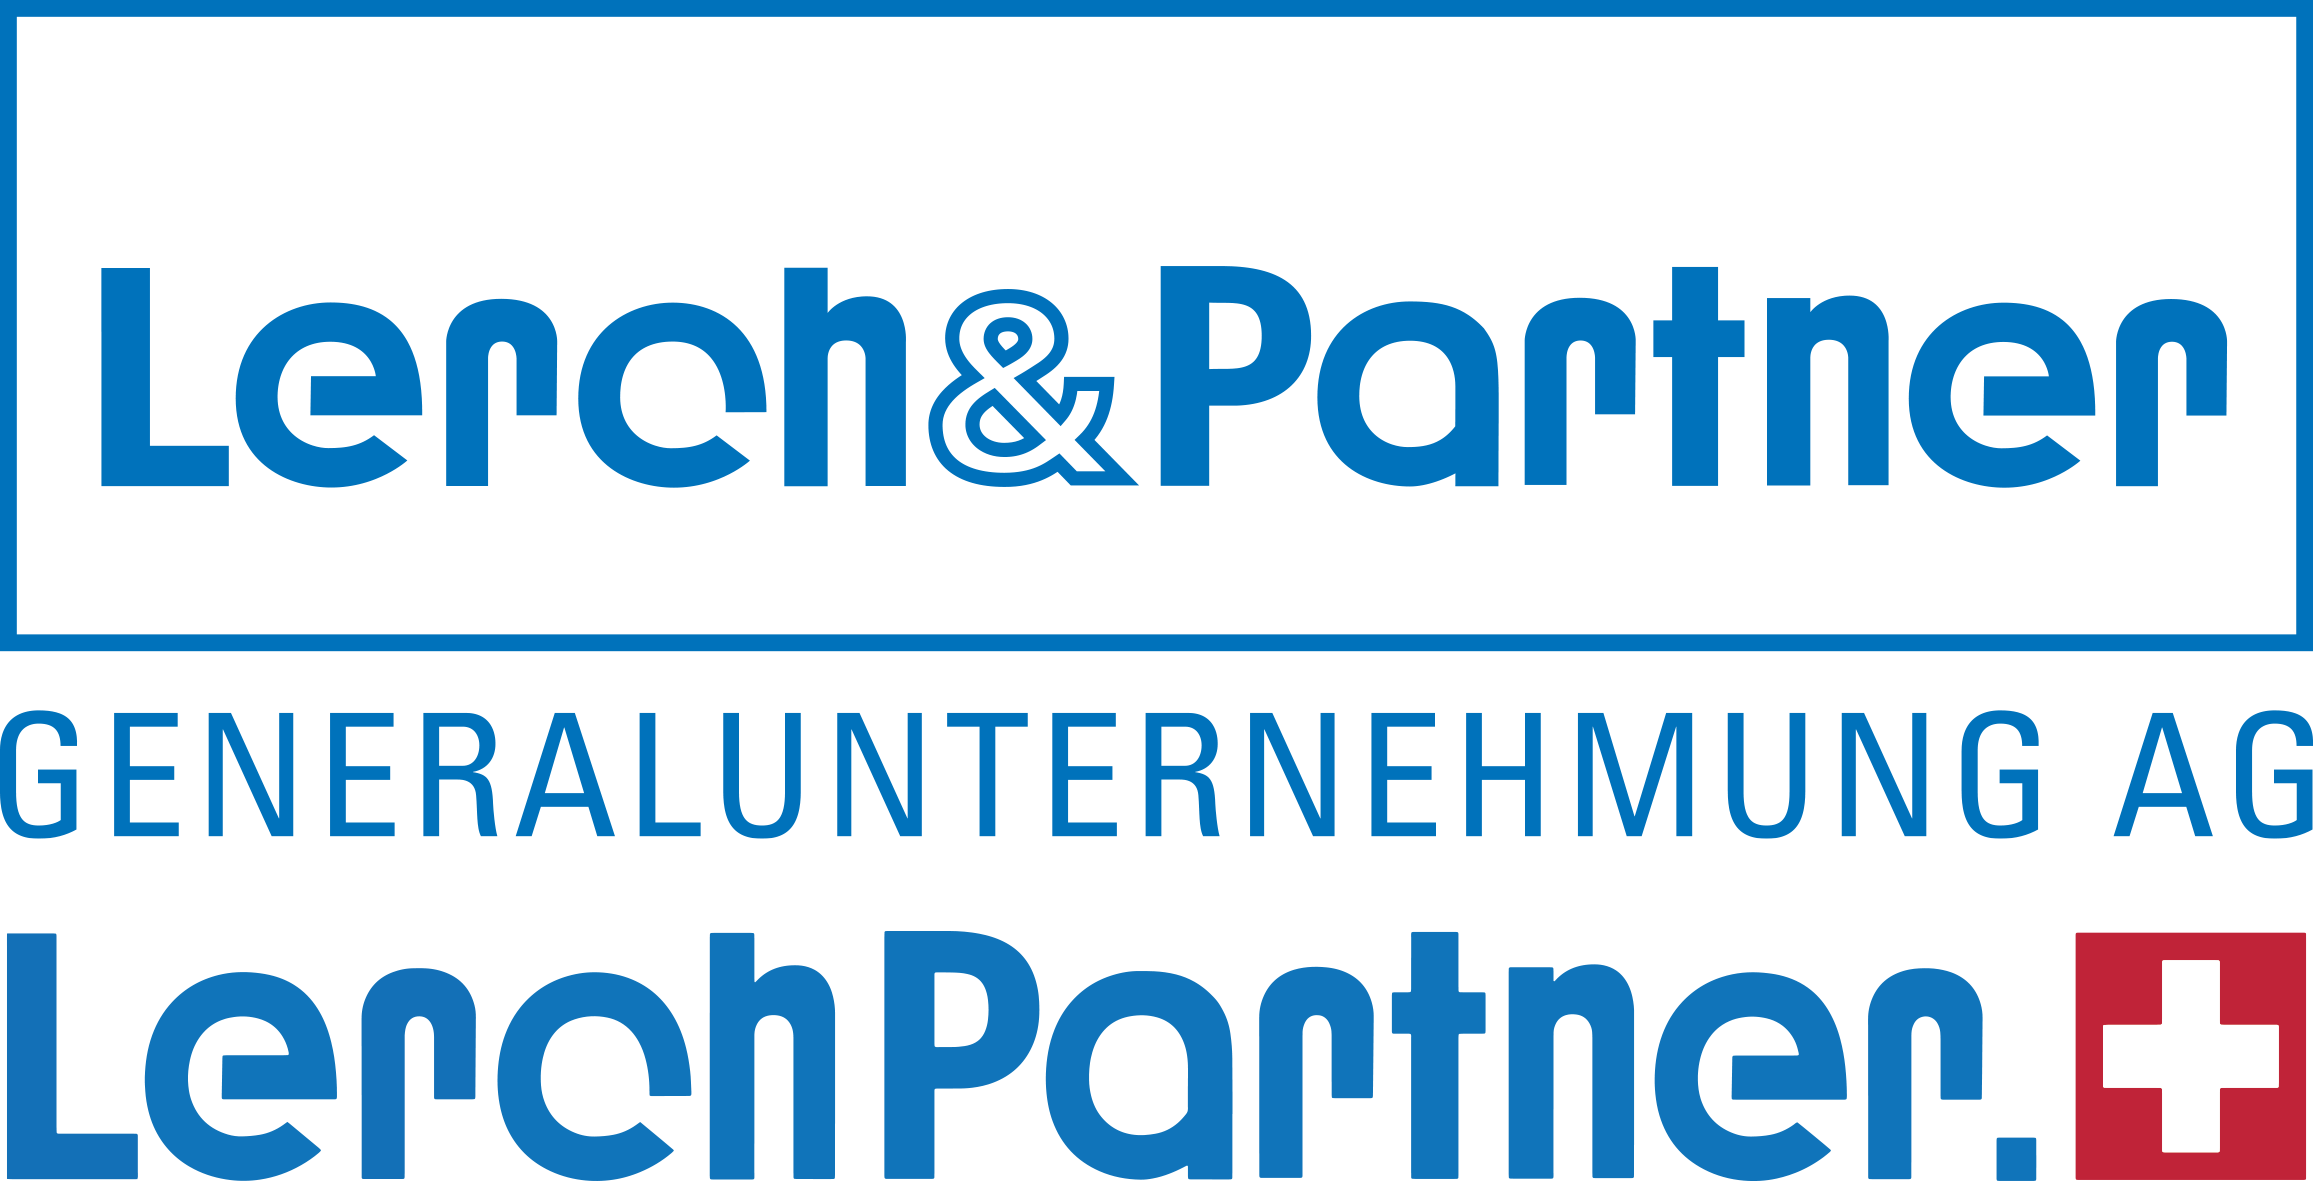 http://www.lerchpartner.ch/immobilientraum/